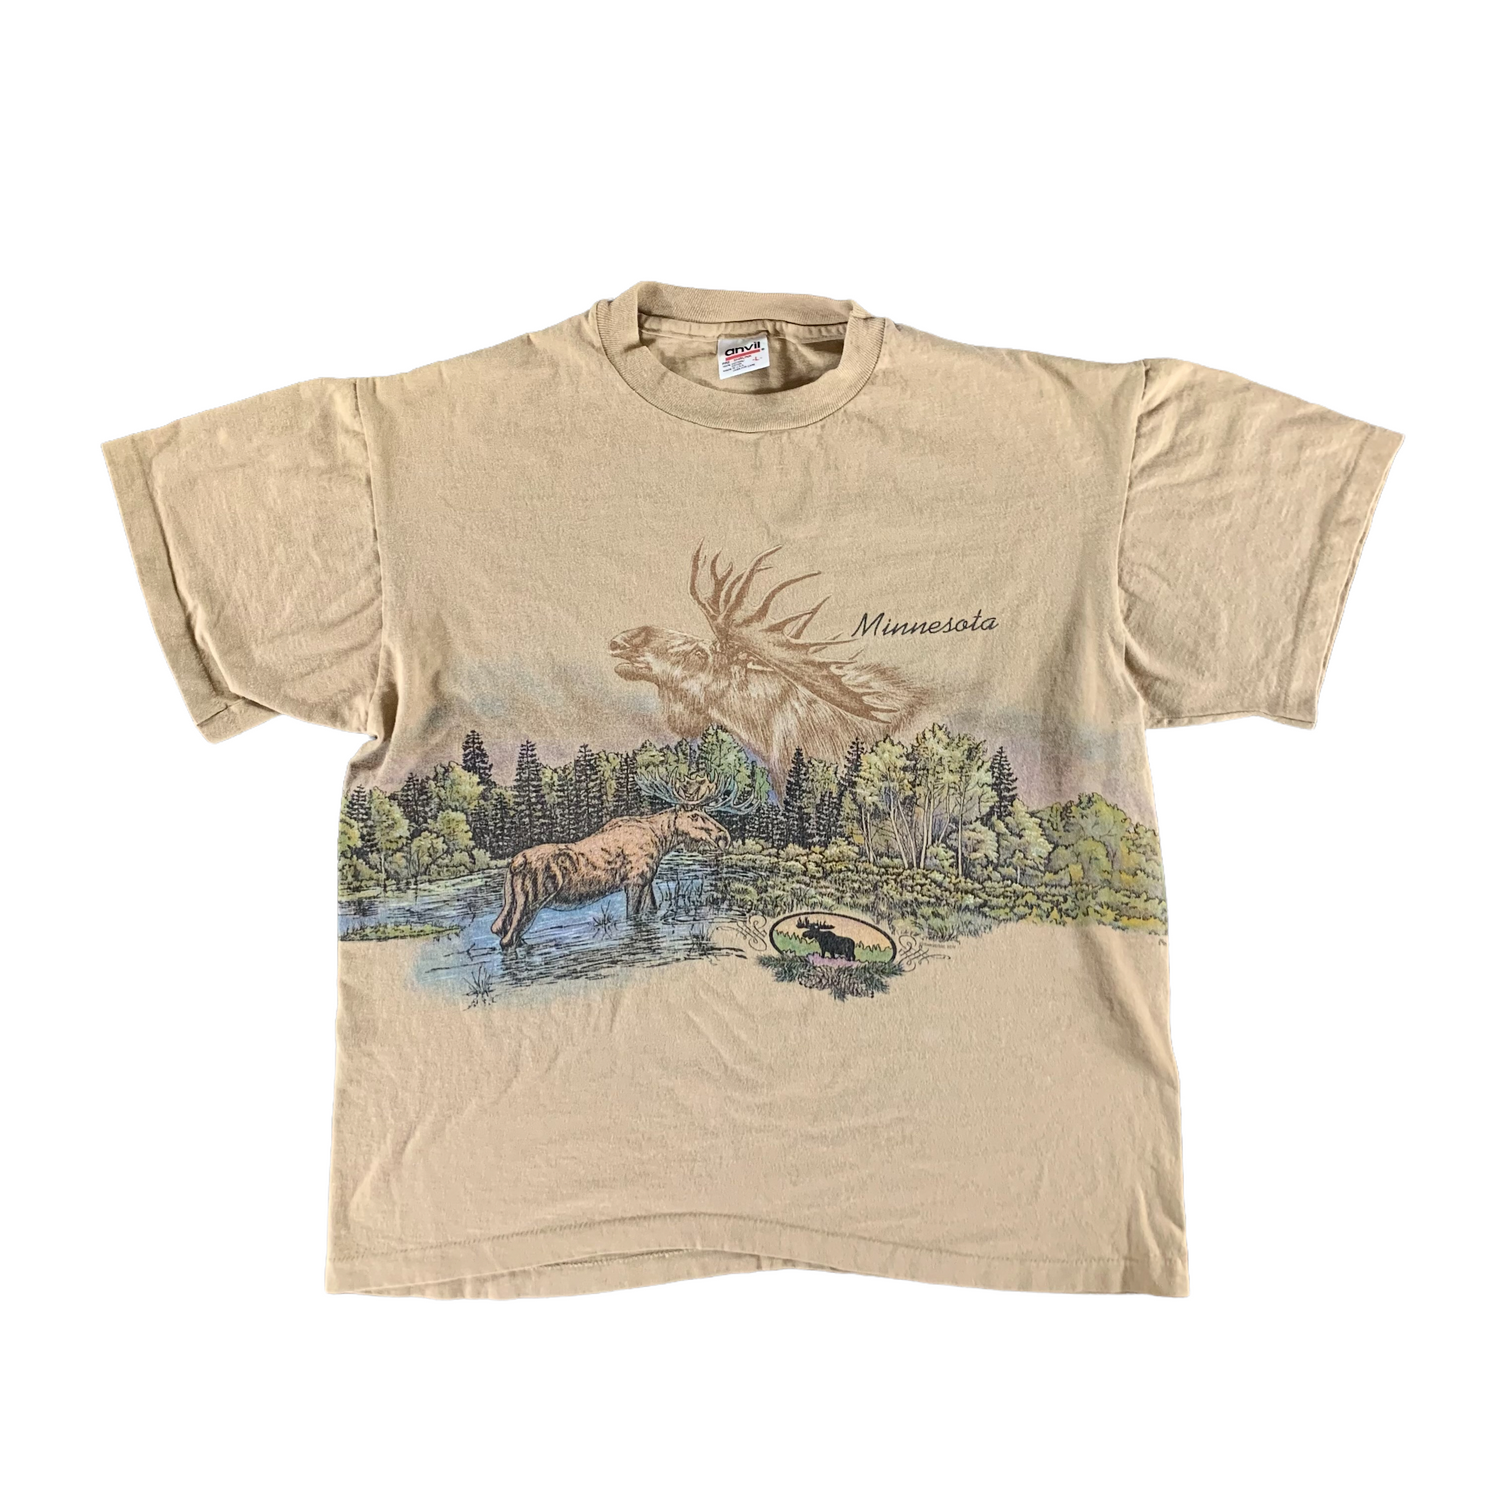 Vintage 1990s Minnesota T-shirt size Large